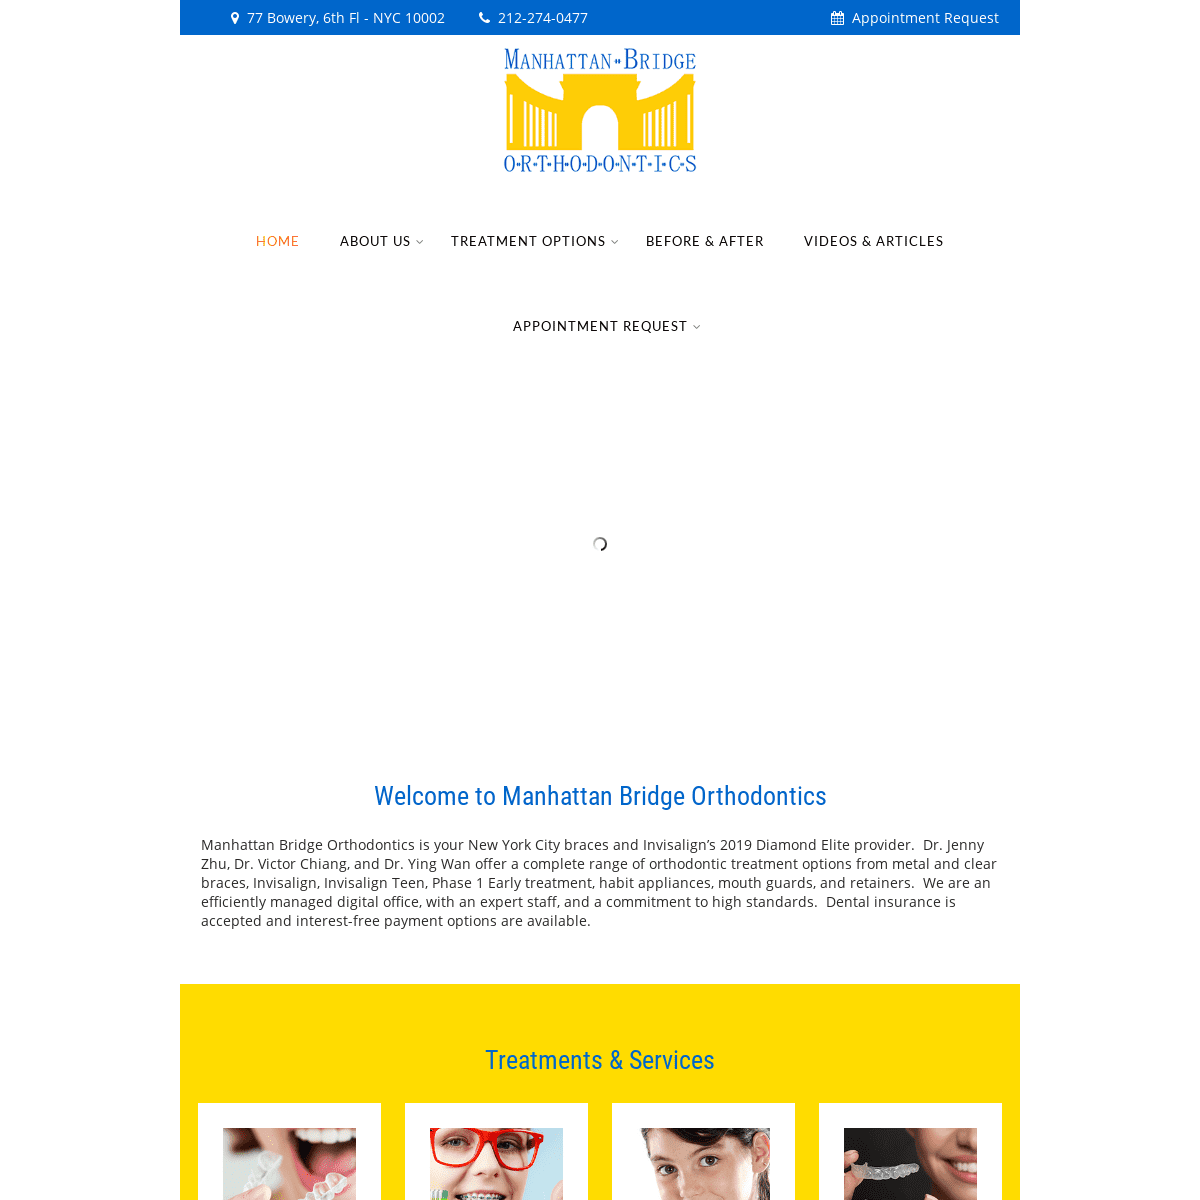 A complete backup of manhattanbridgeortho.com